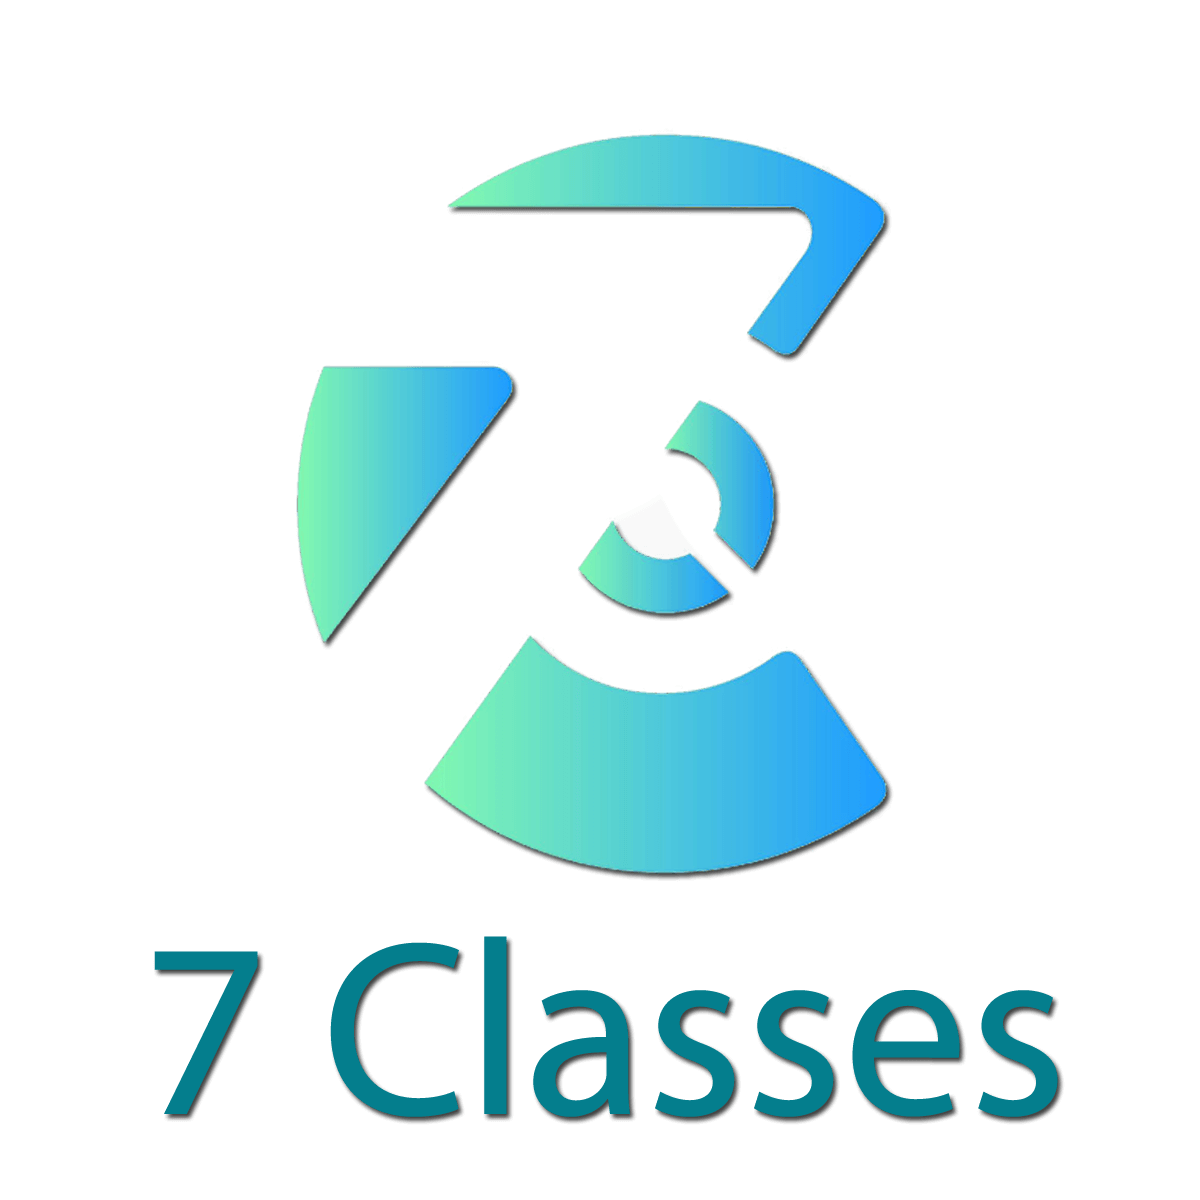 7 classes logo